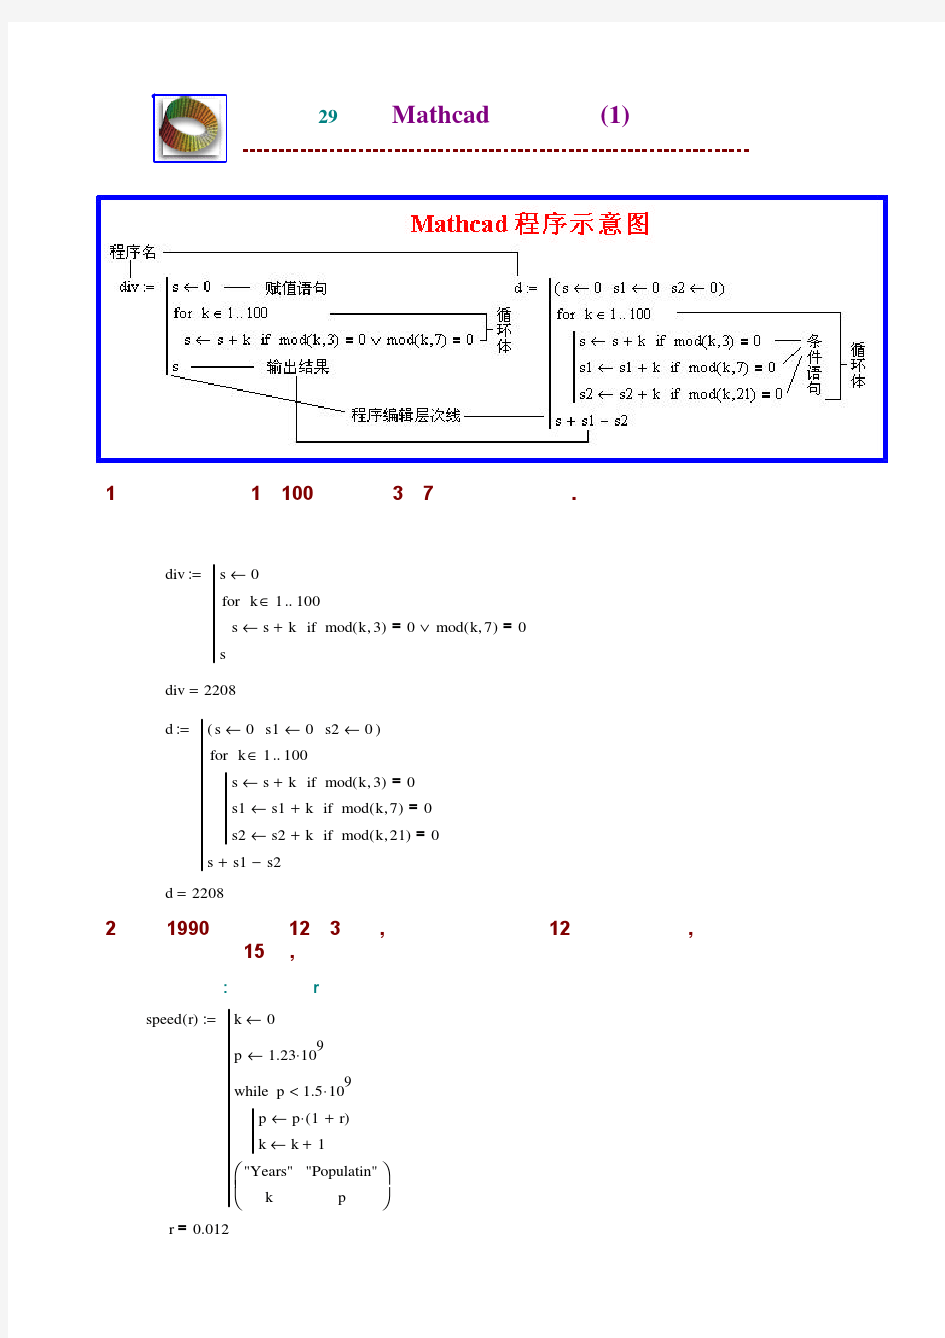 Mathcad 编程举例完整版